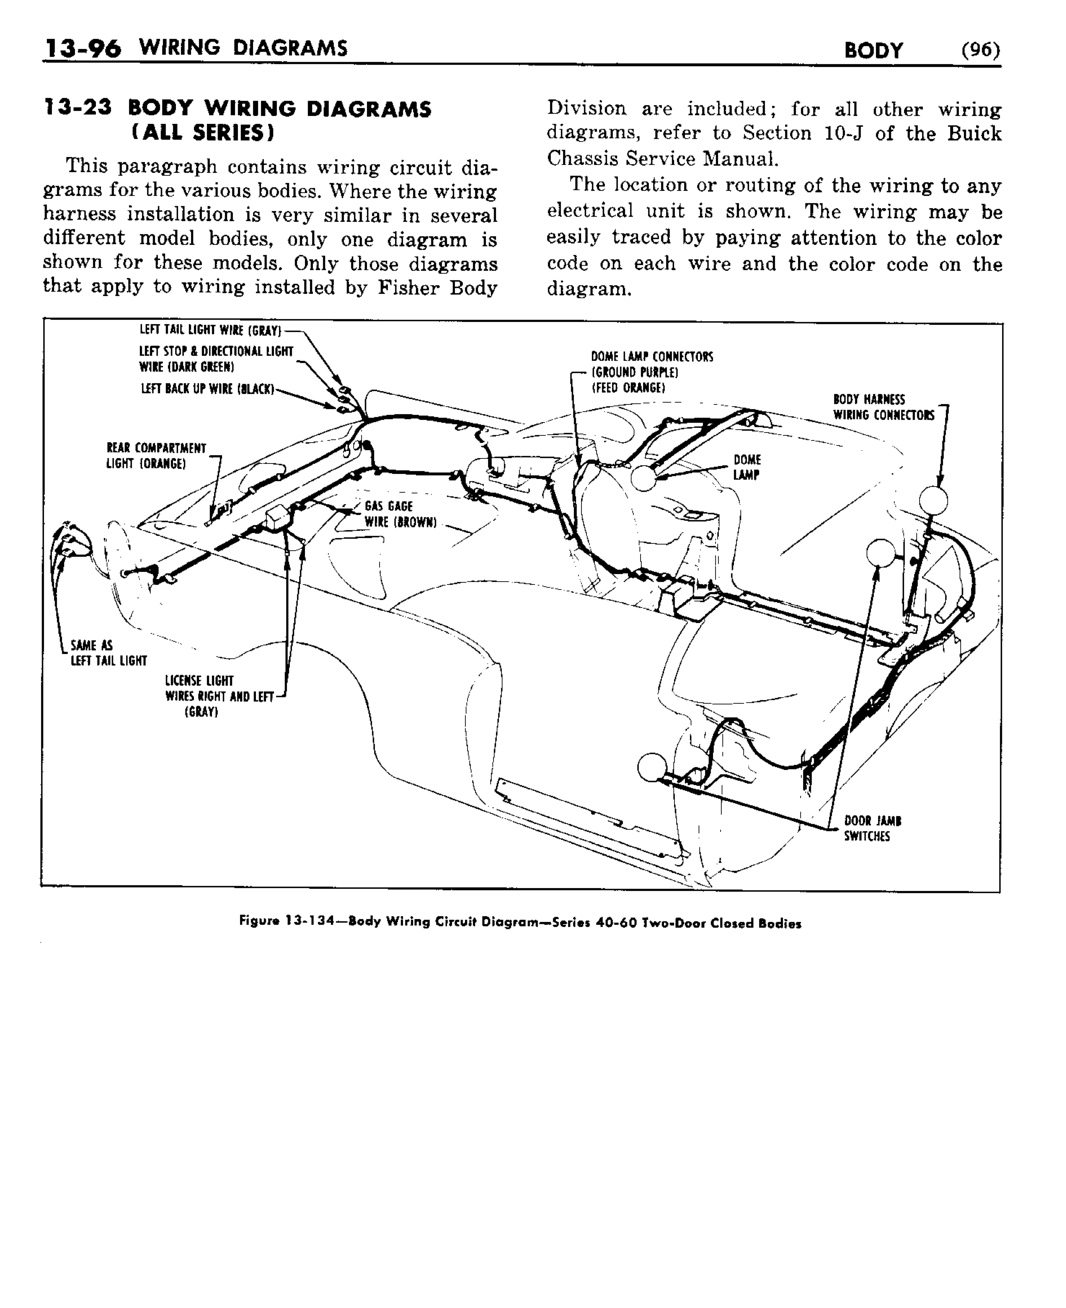 n_1958 Buick Body Service Manual-097-097.jpg